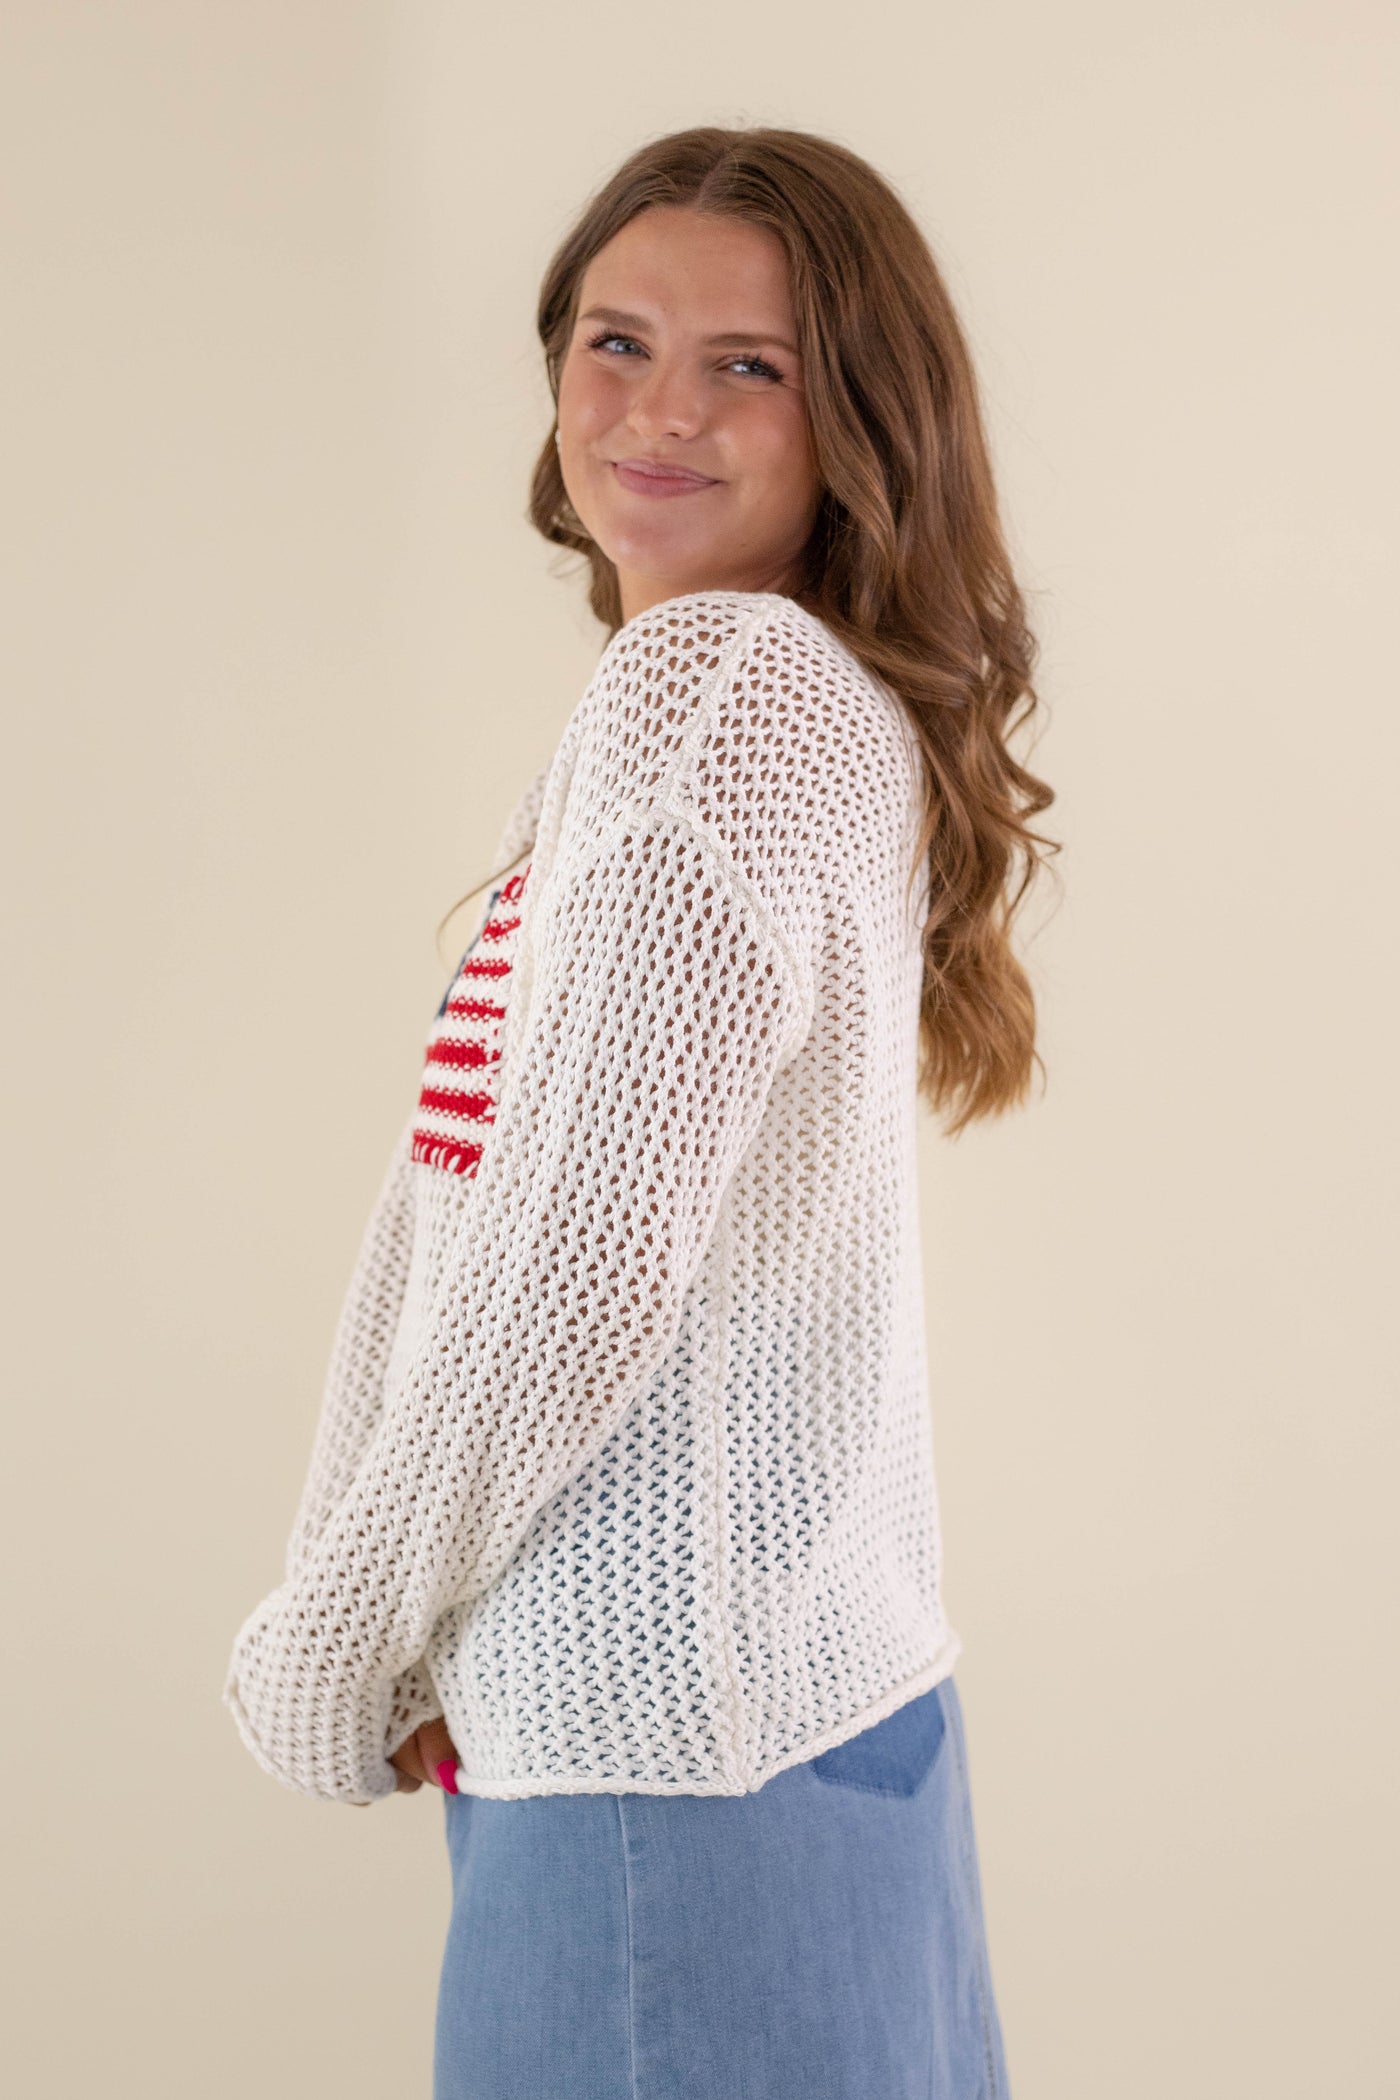 Women's American Flag Sweater- White Flag Sweater- Americana Lightweight Sweater